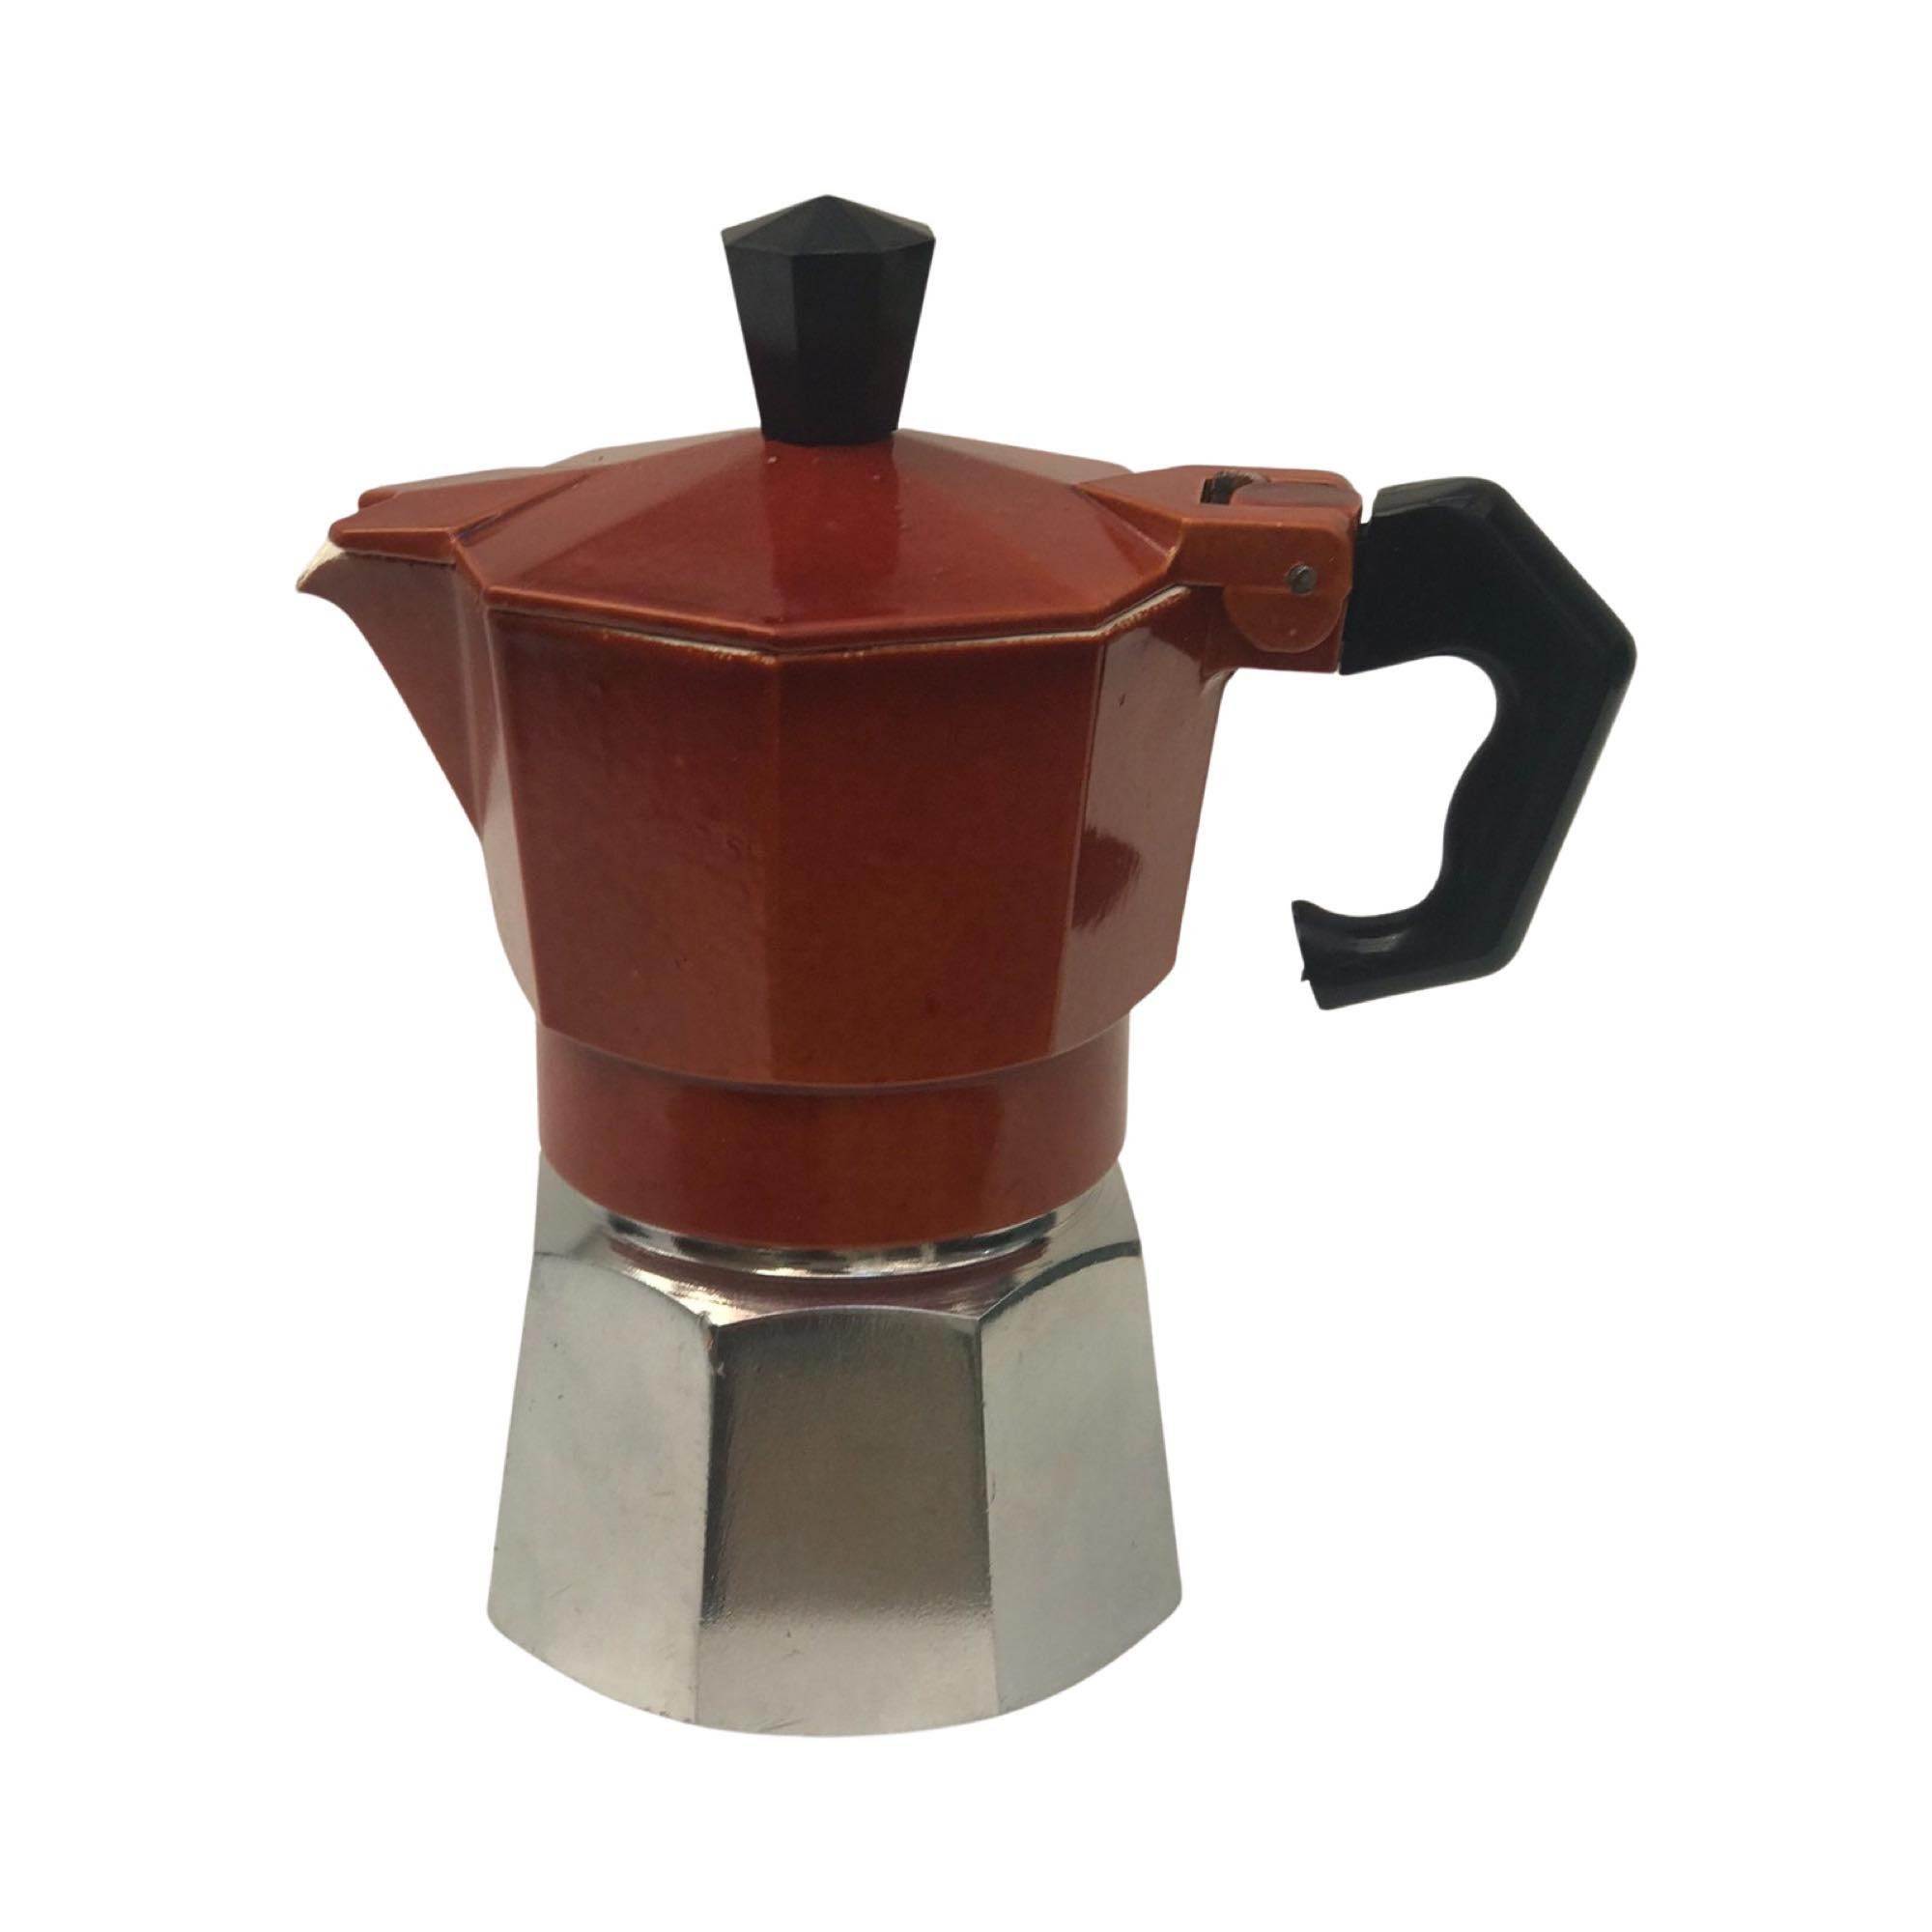 Creative Home Electric Moka 6 Cup Silver Espresso Maker | CVS